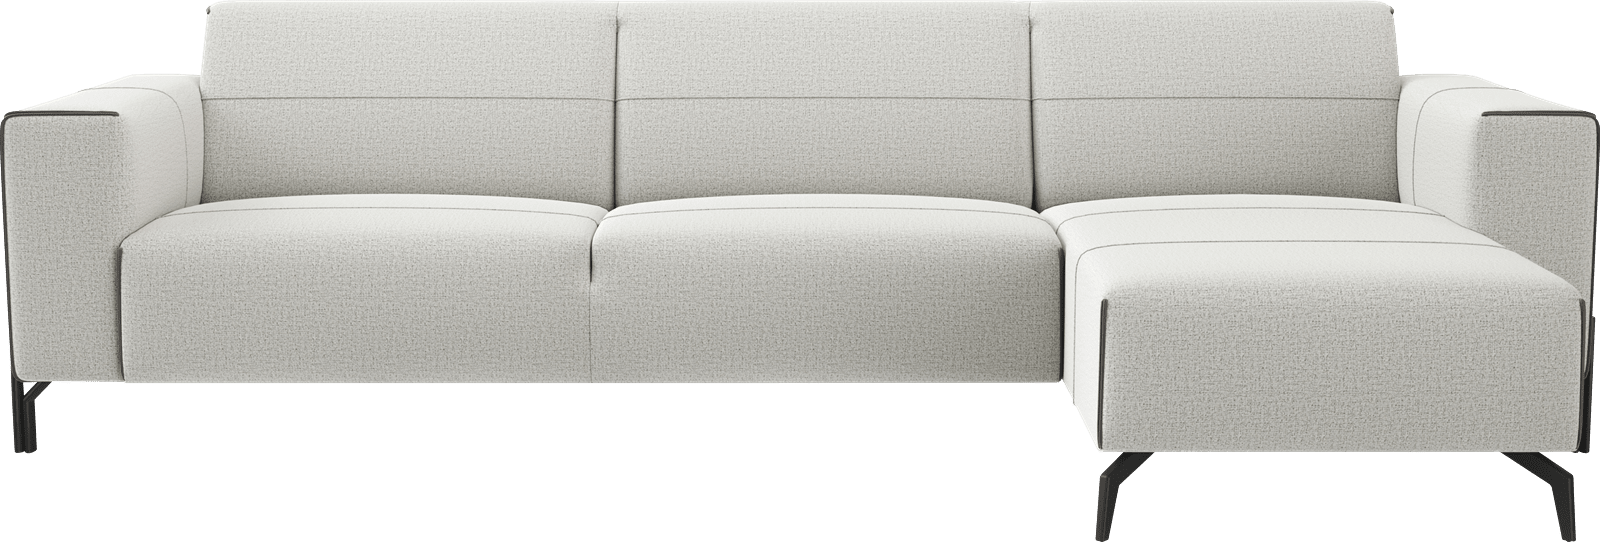 XOOON - Prizzi - Design minimaliste - Canapés - 3-places accoudoir gauche